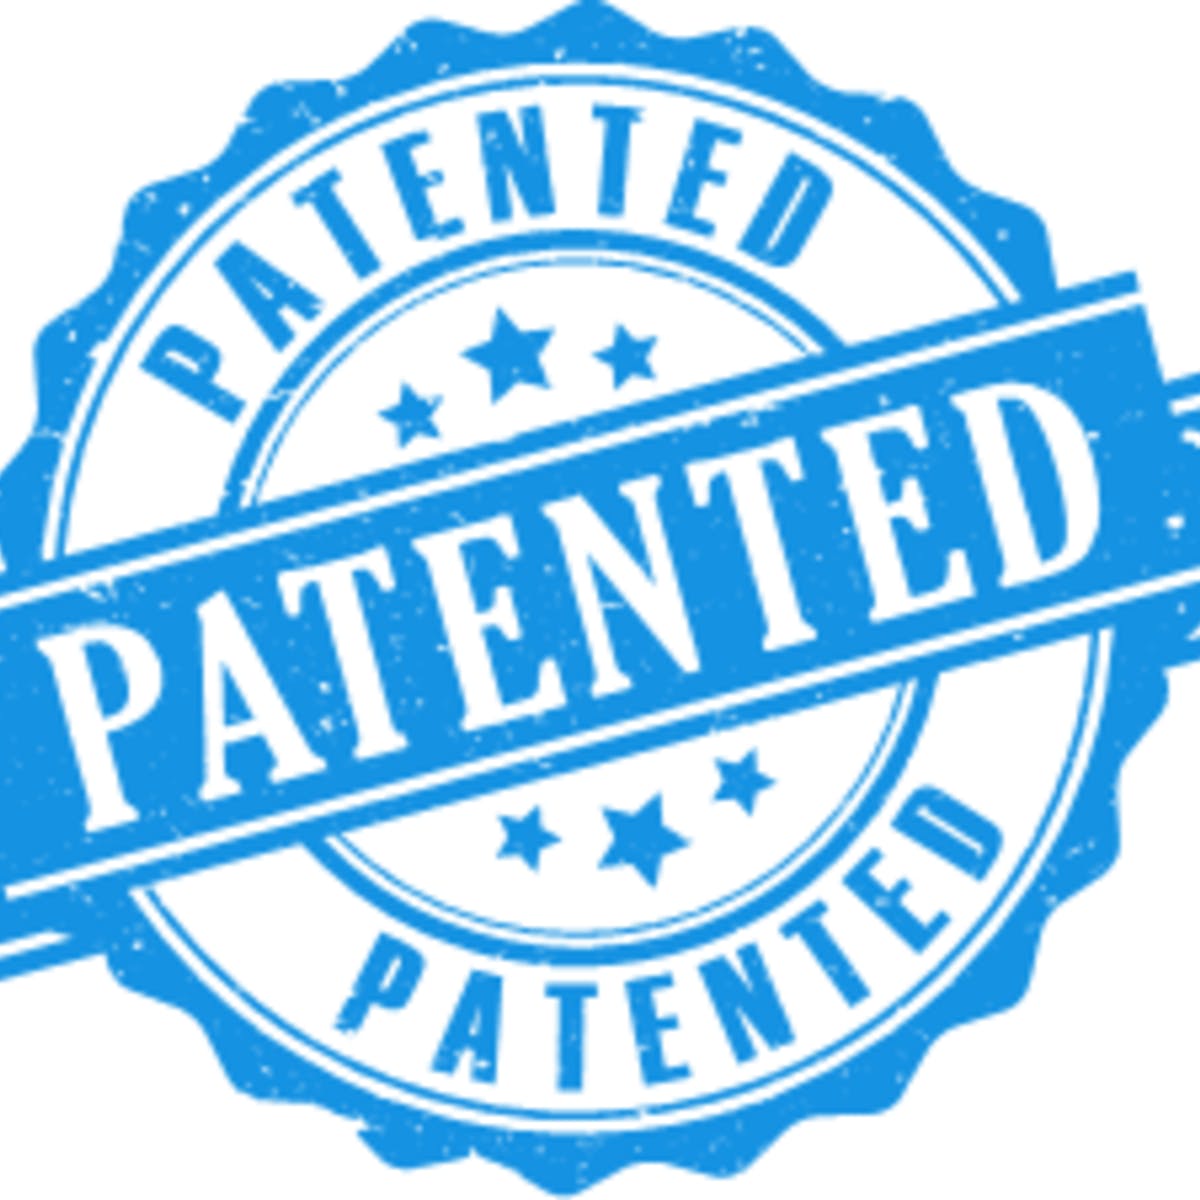 patent my logo